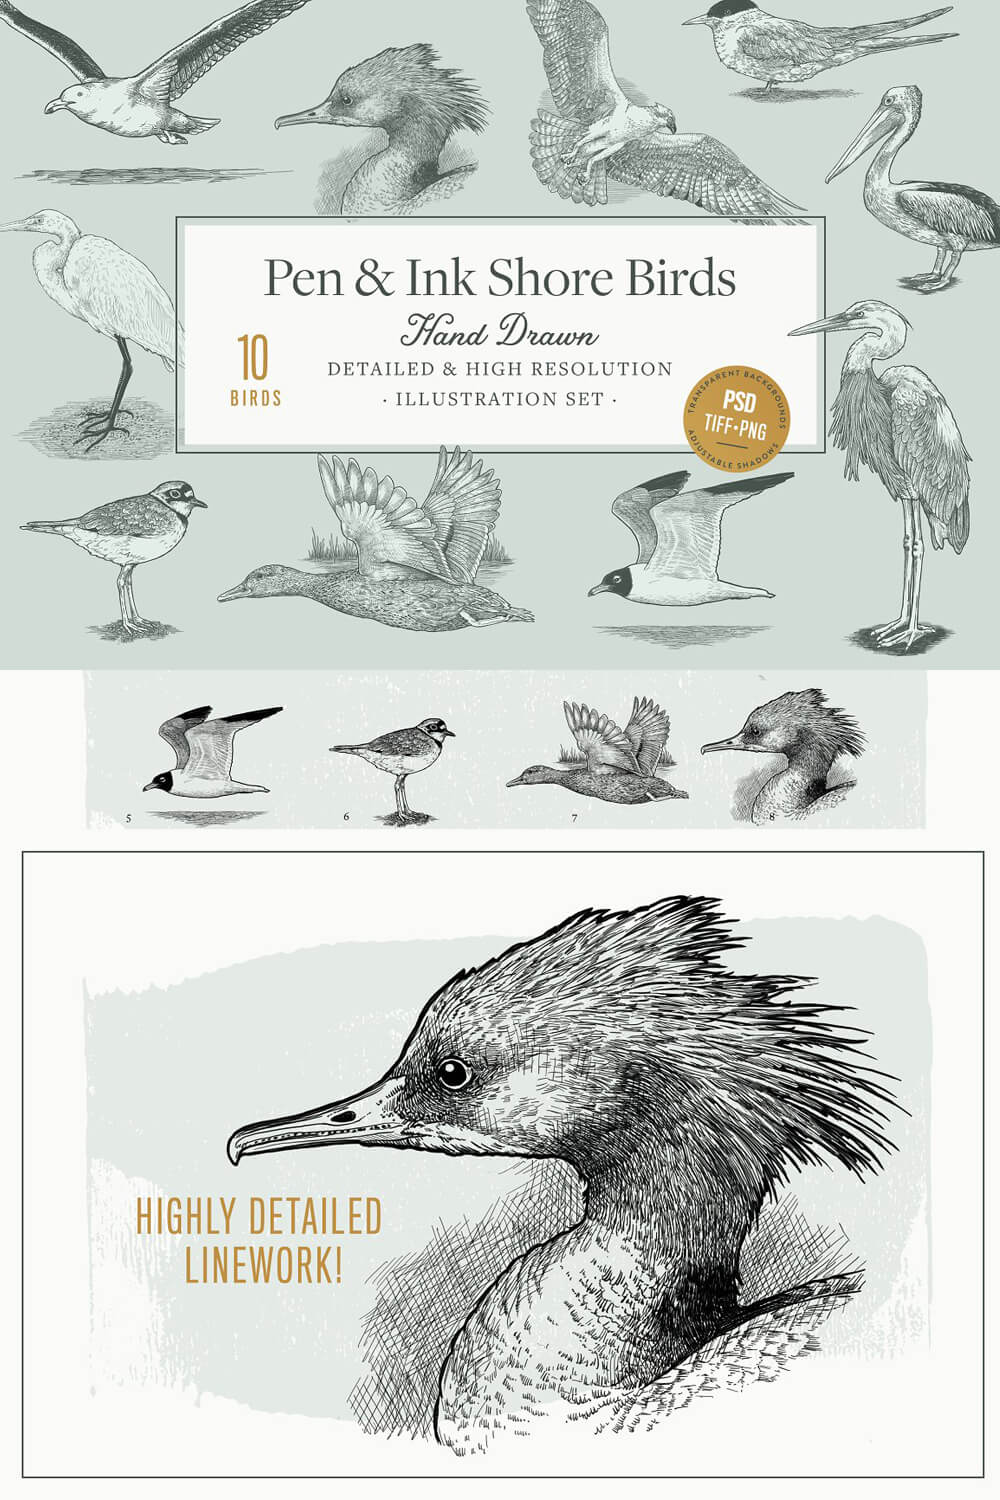 Illustration set of pen and ink shore birds.